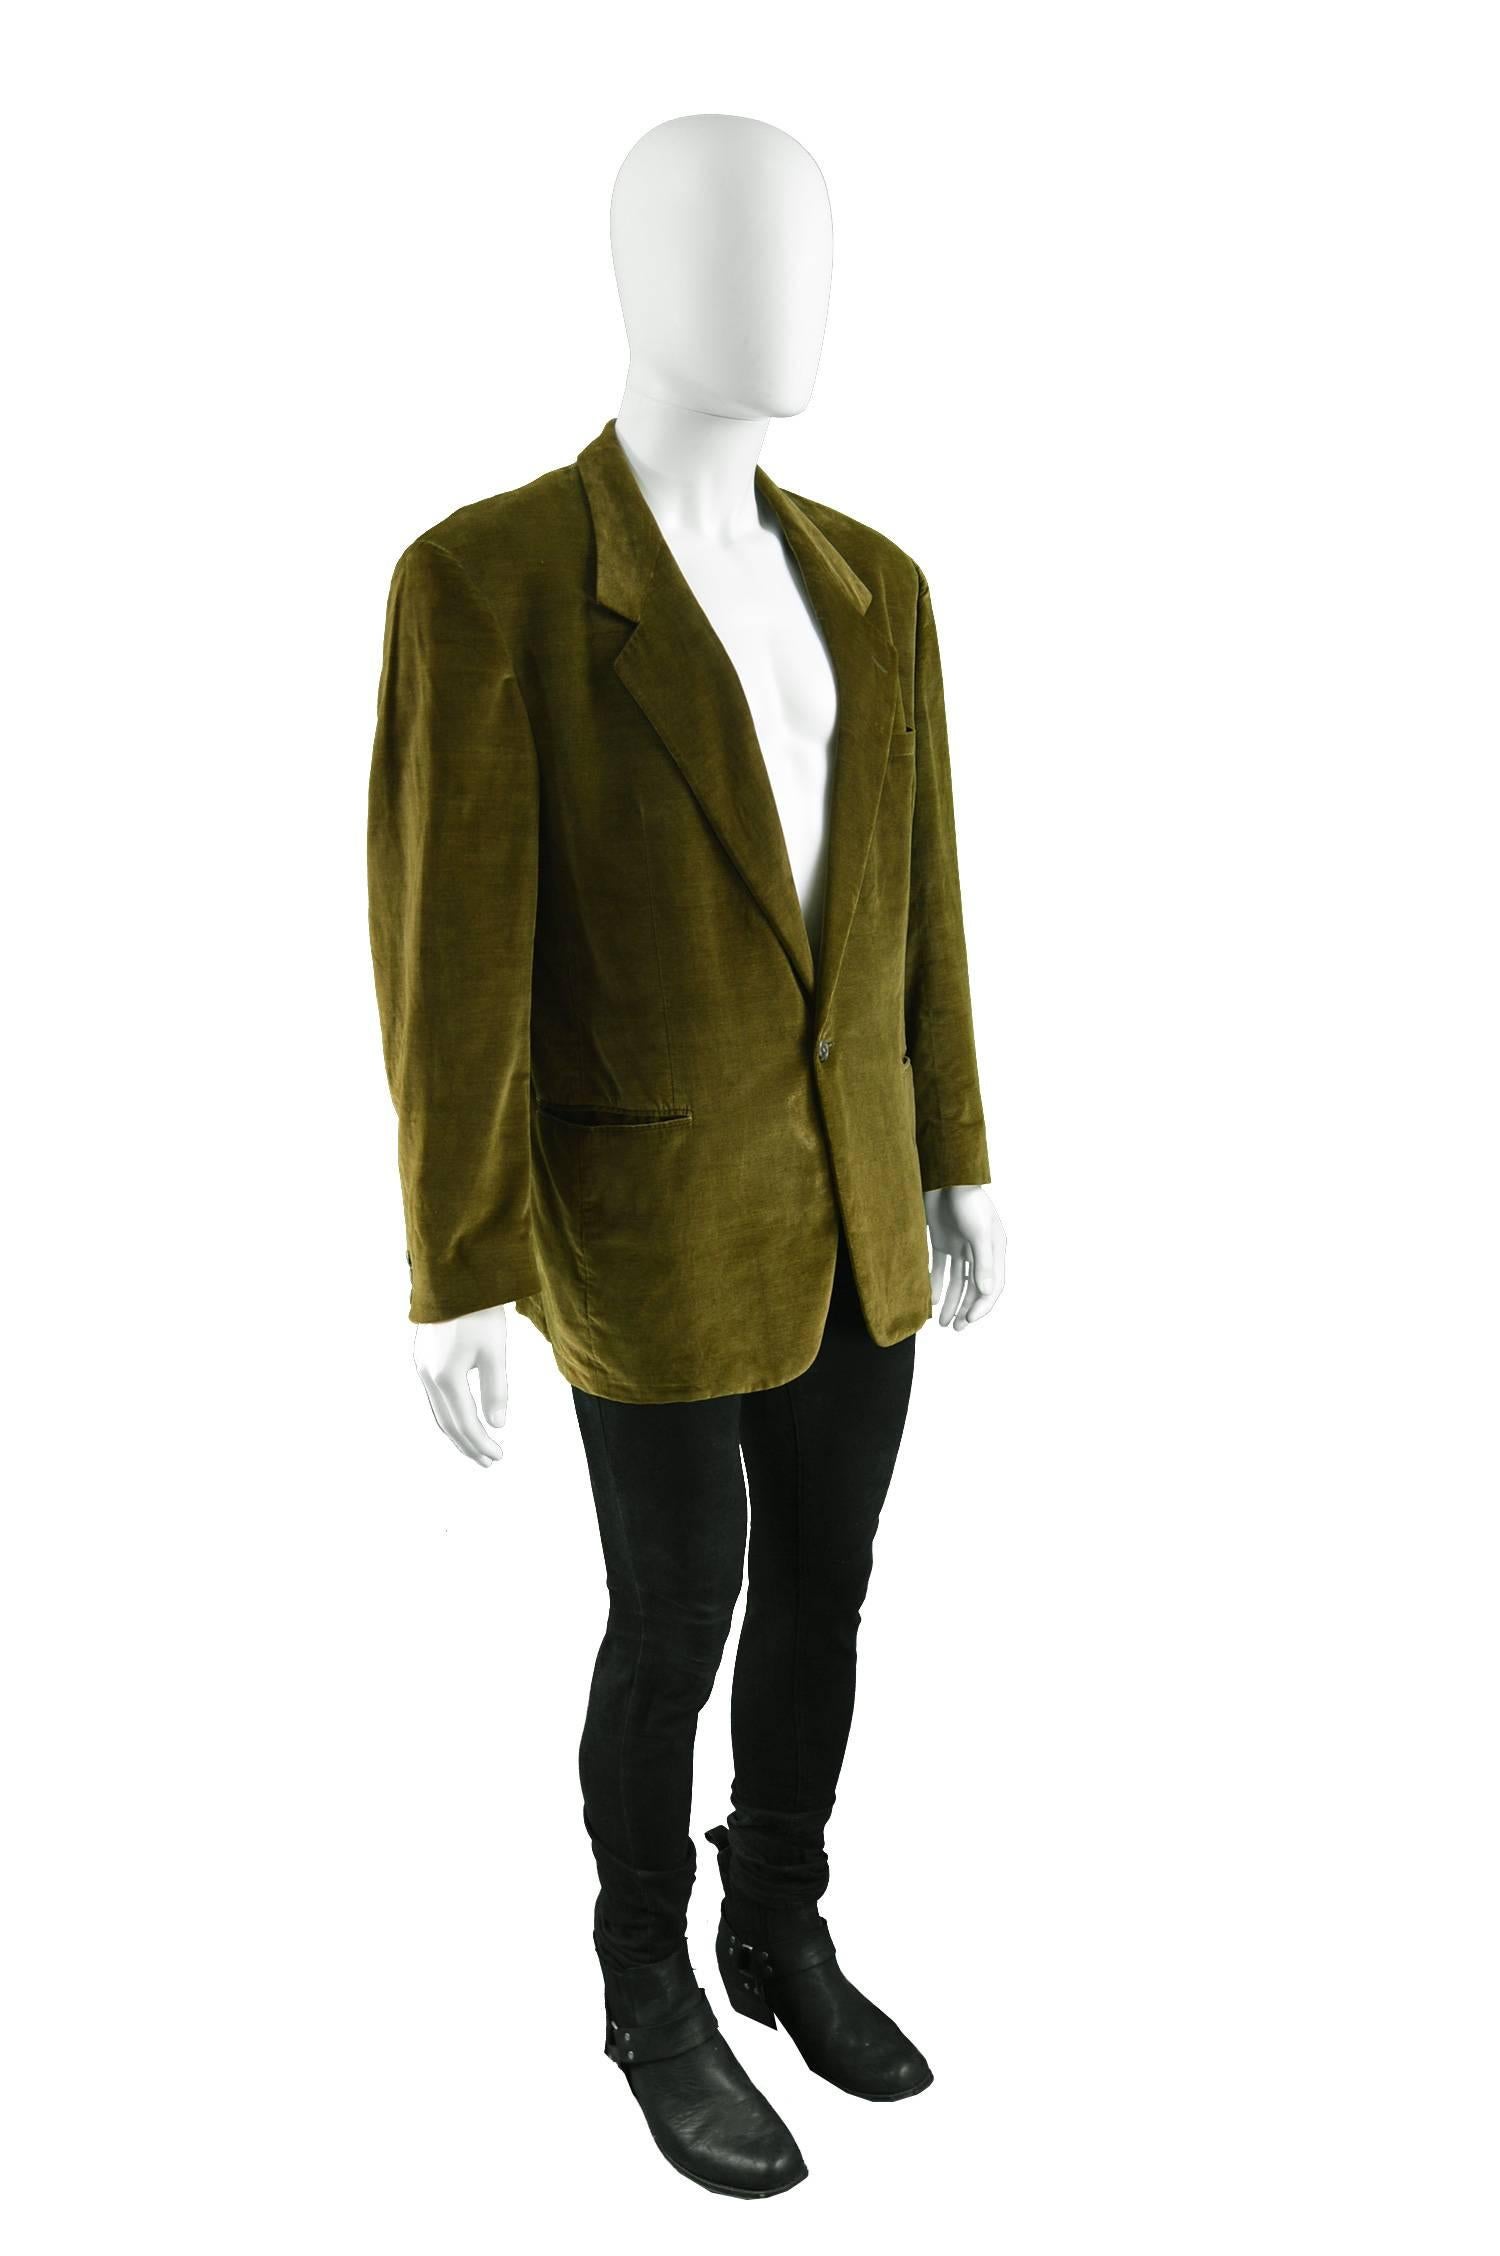 Gianni Versace Men's Vintage Brown Velvet Bold Shoulder Blazer Jacket, 1980s (Braun)